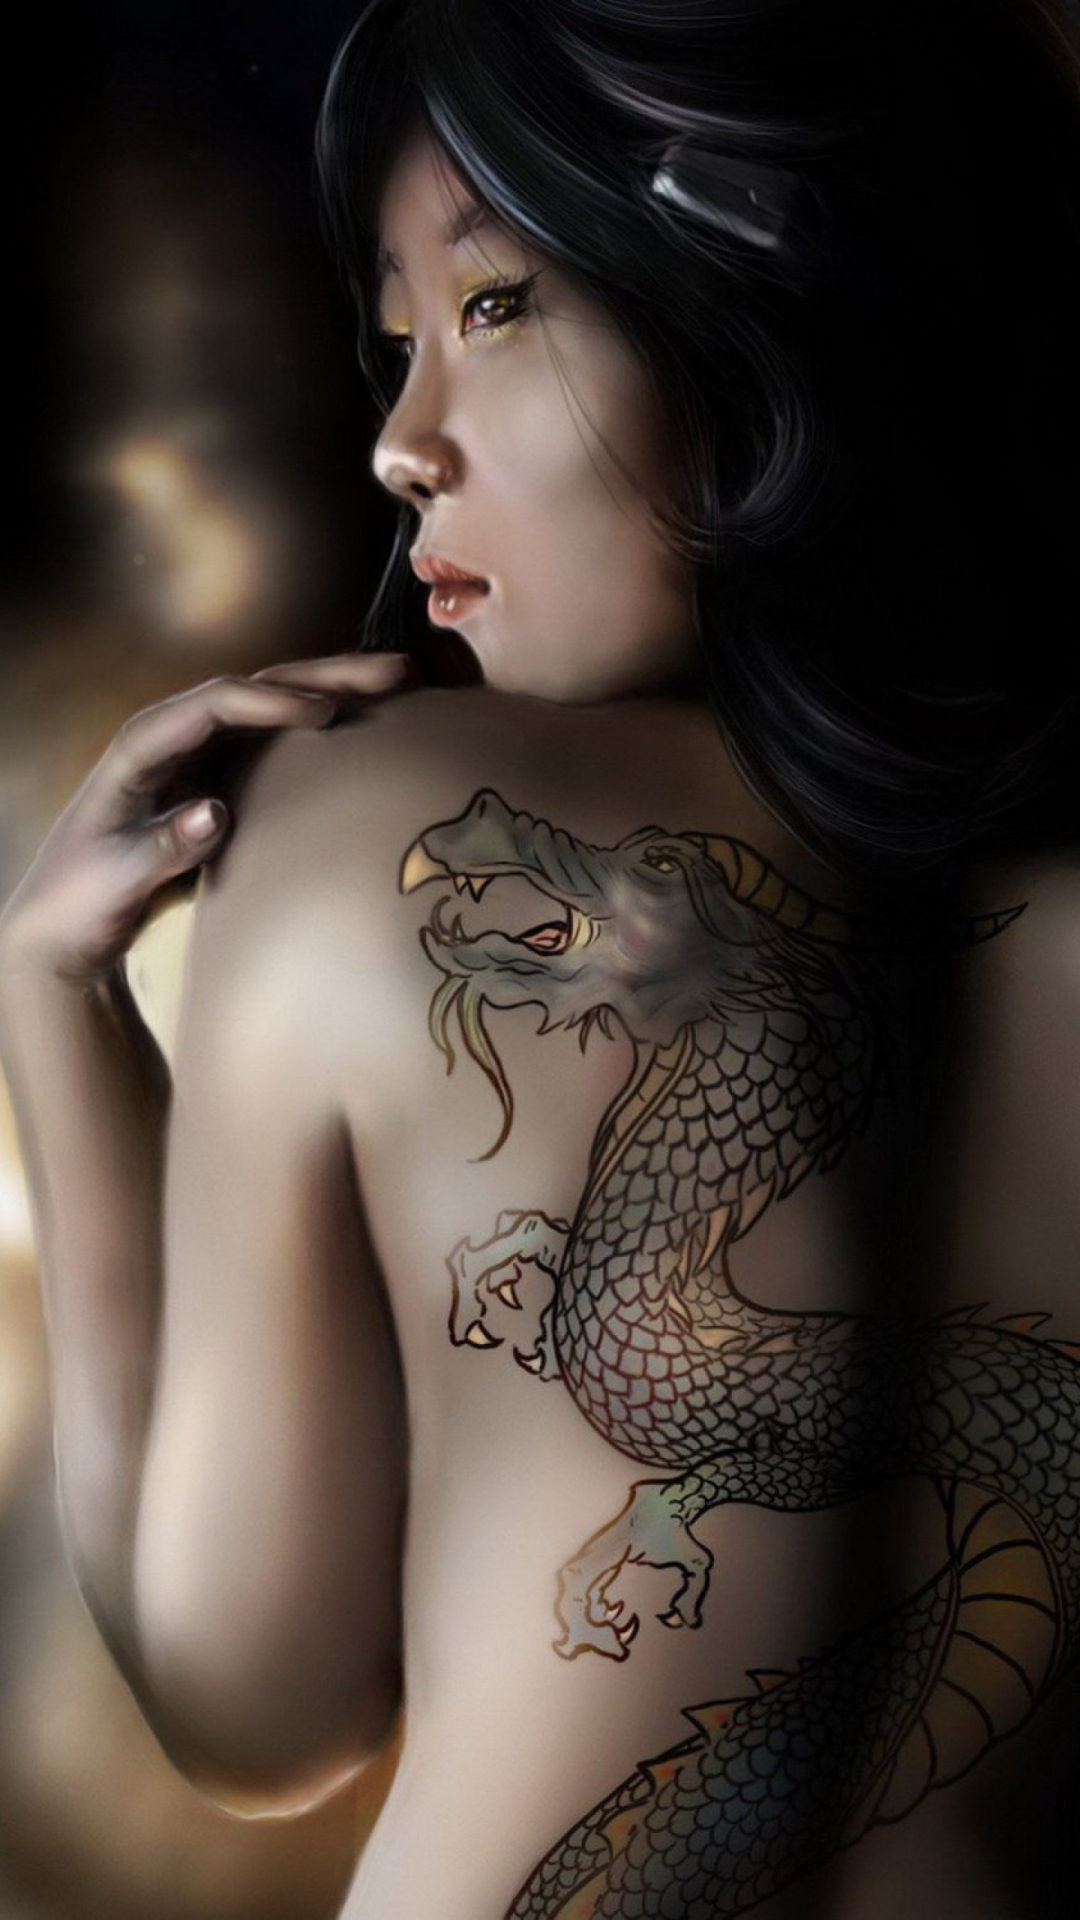 Girl With Dragon Tattoo wallpaper 1080x1920